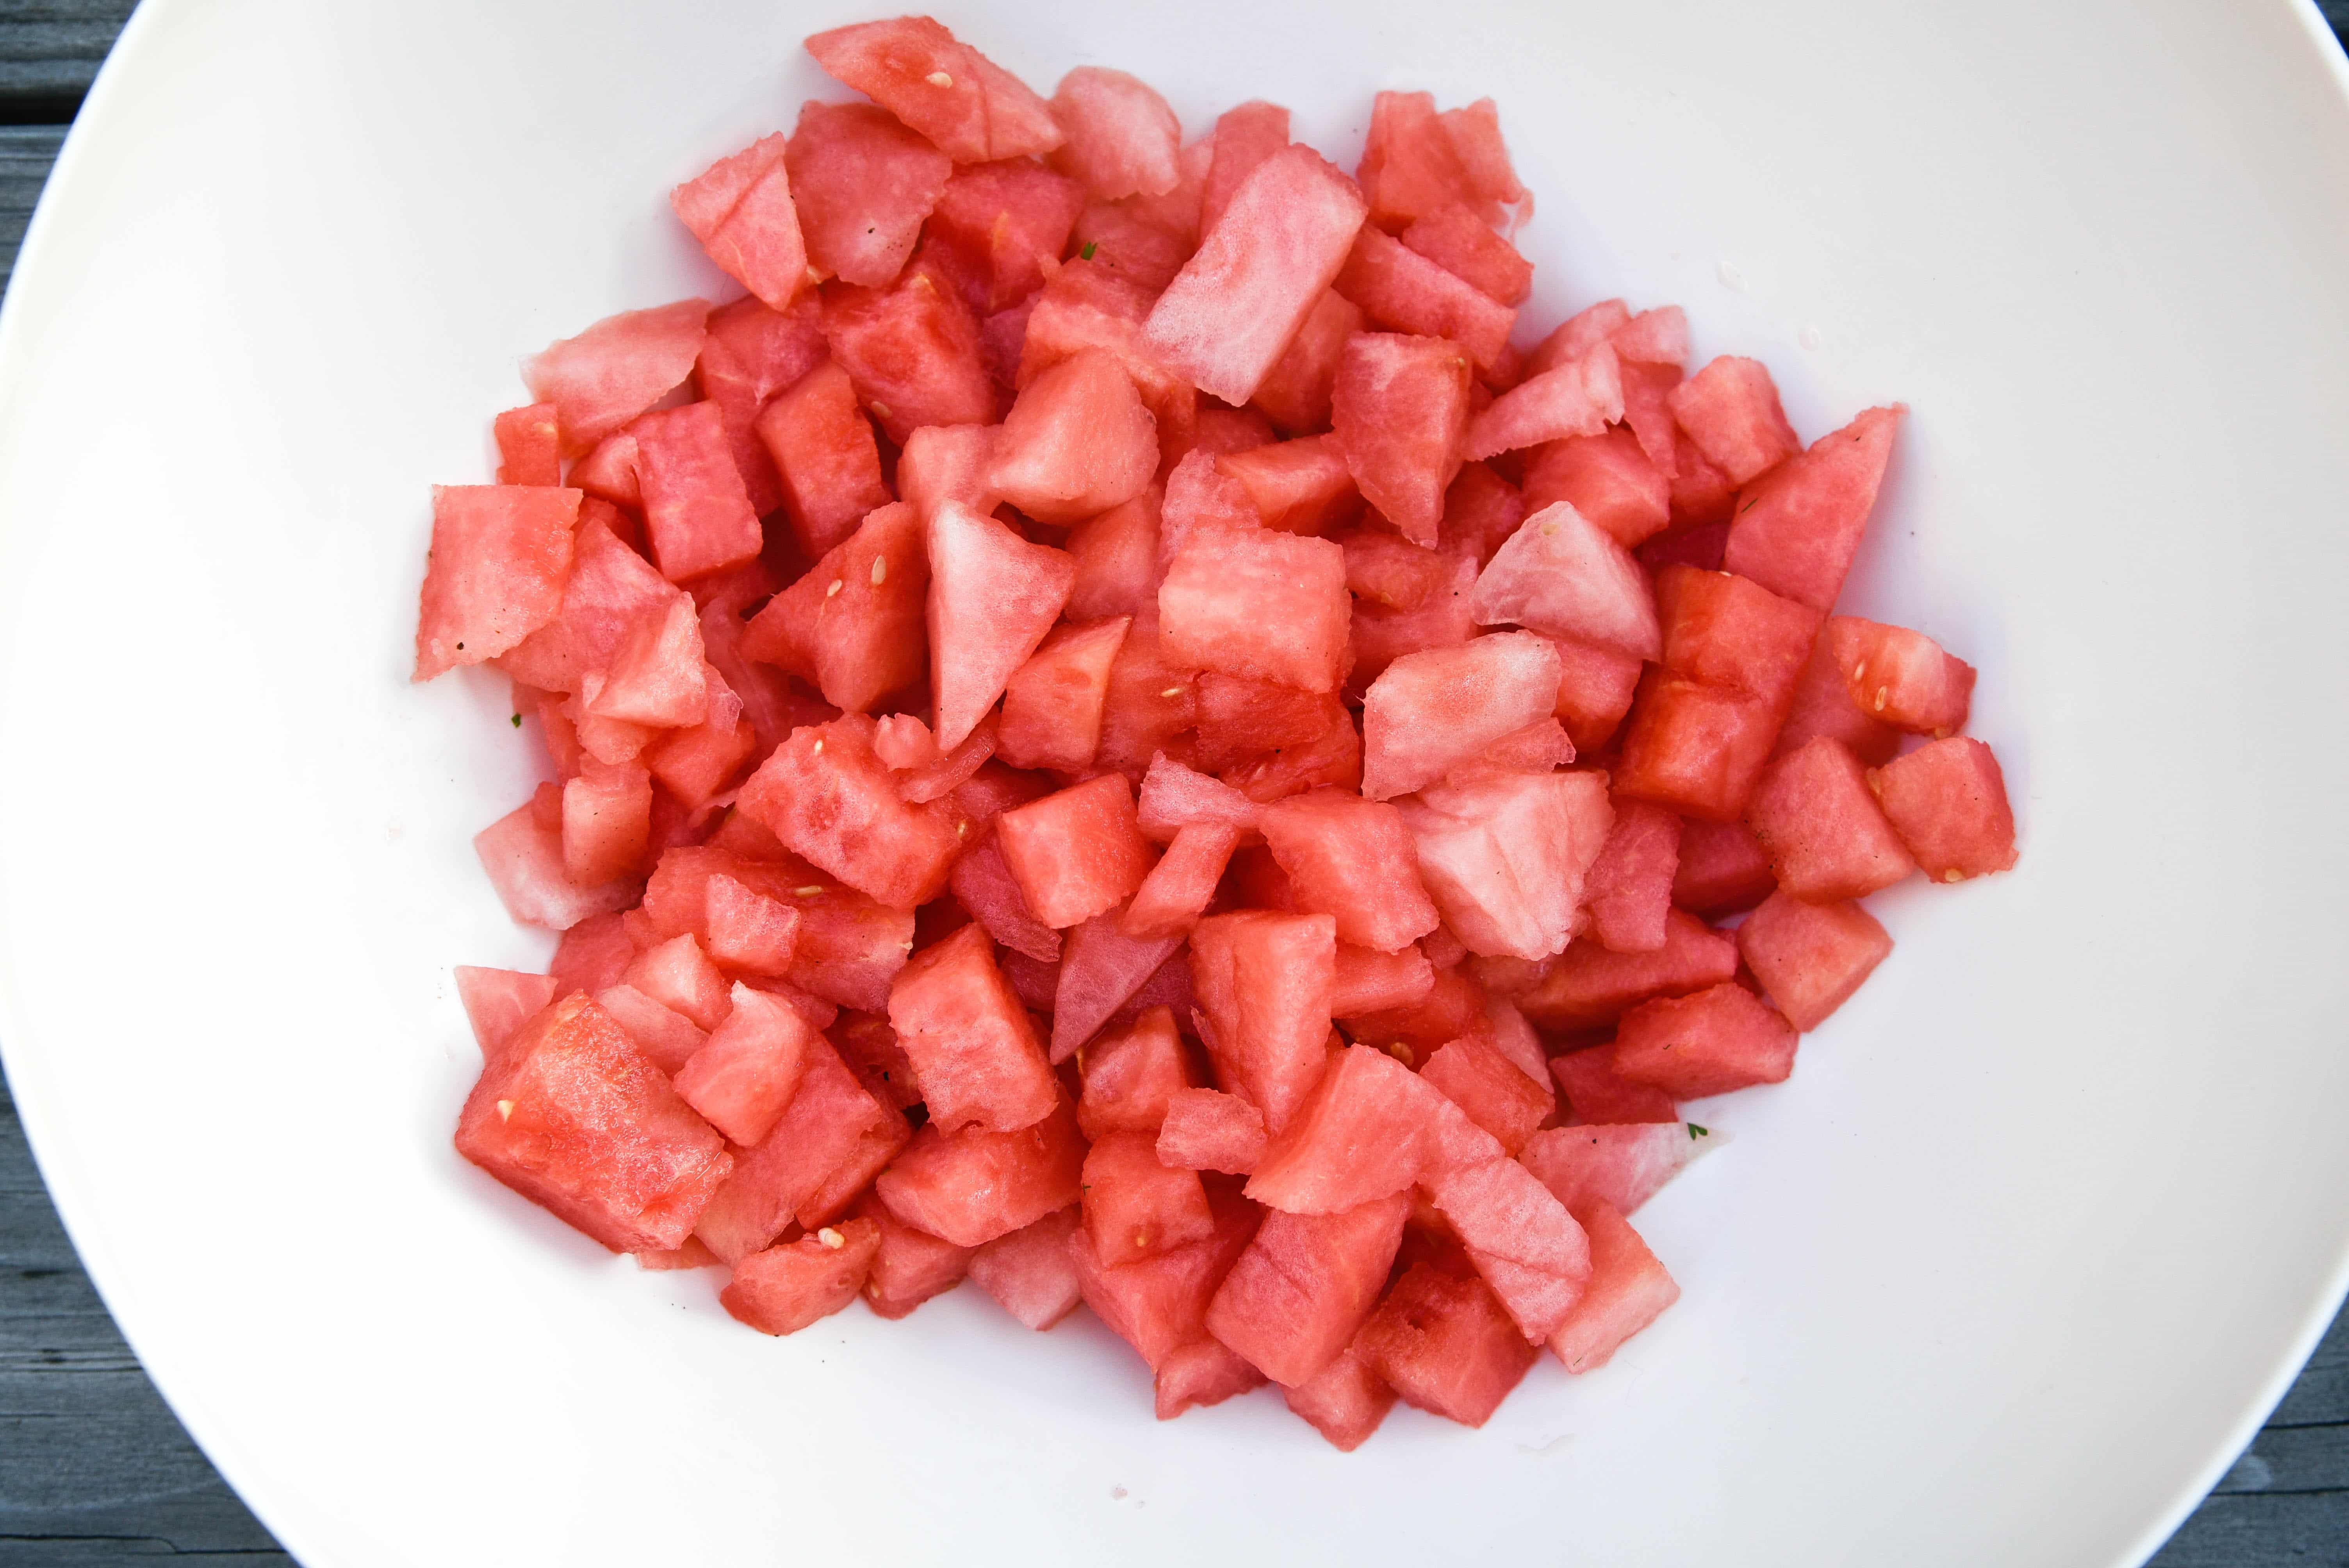 Fresh slices of watermelon